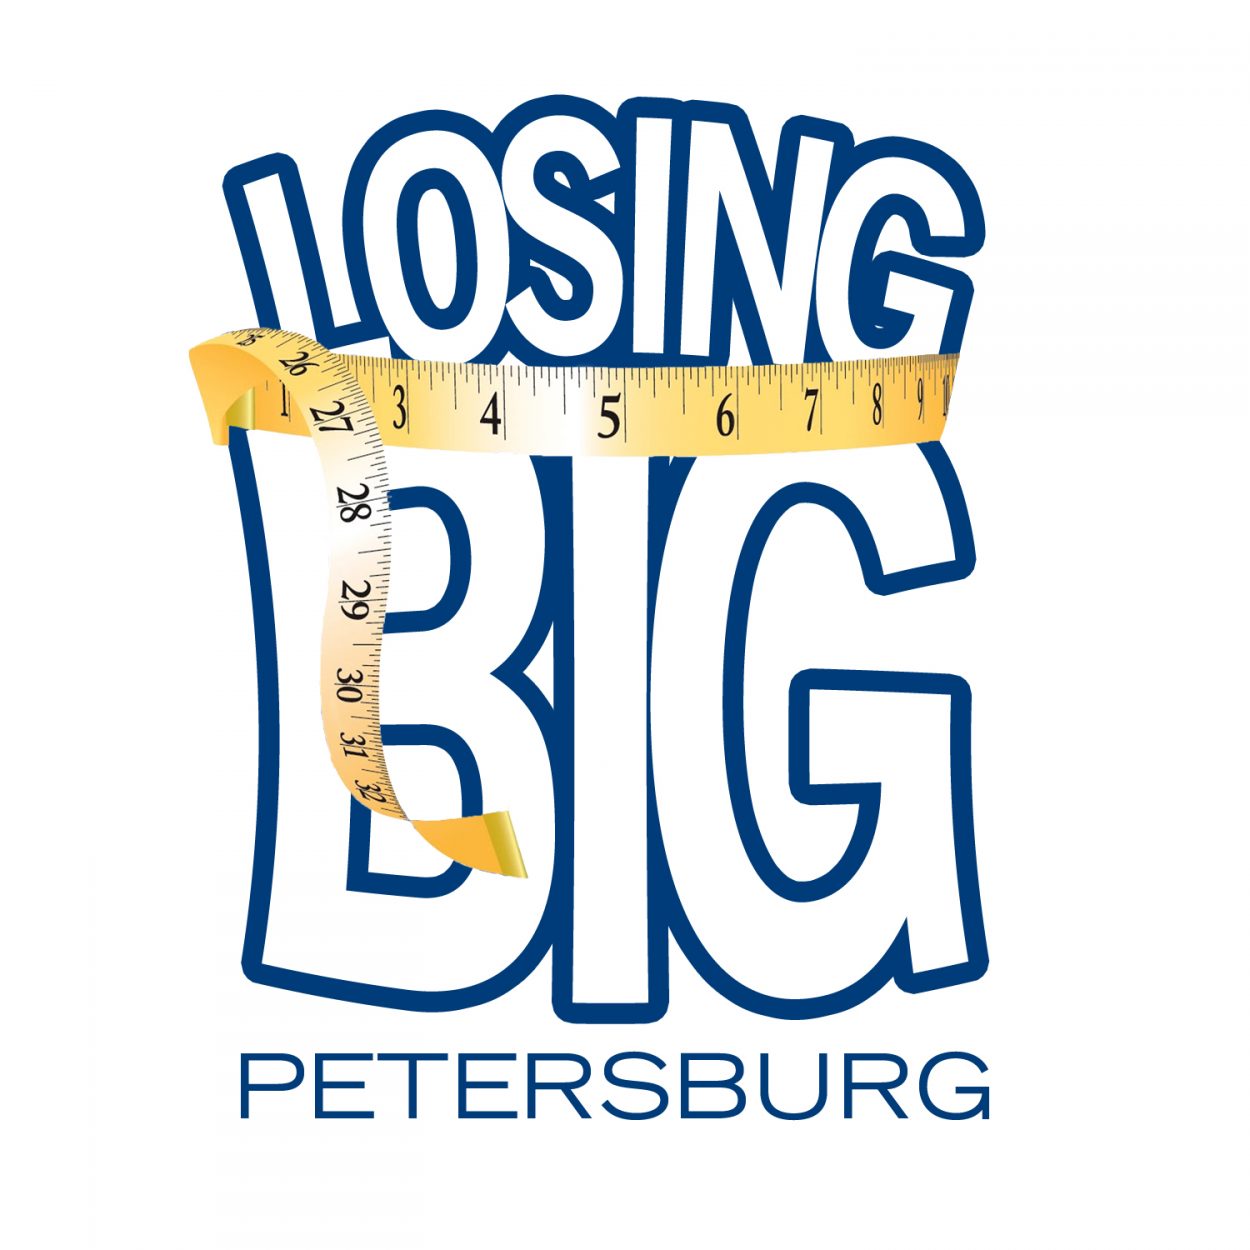 Petersburg starts “Losing Big,” healthy lifestyle contest